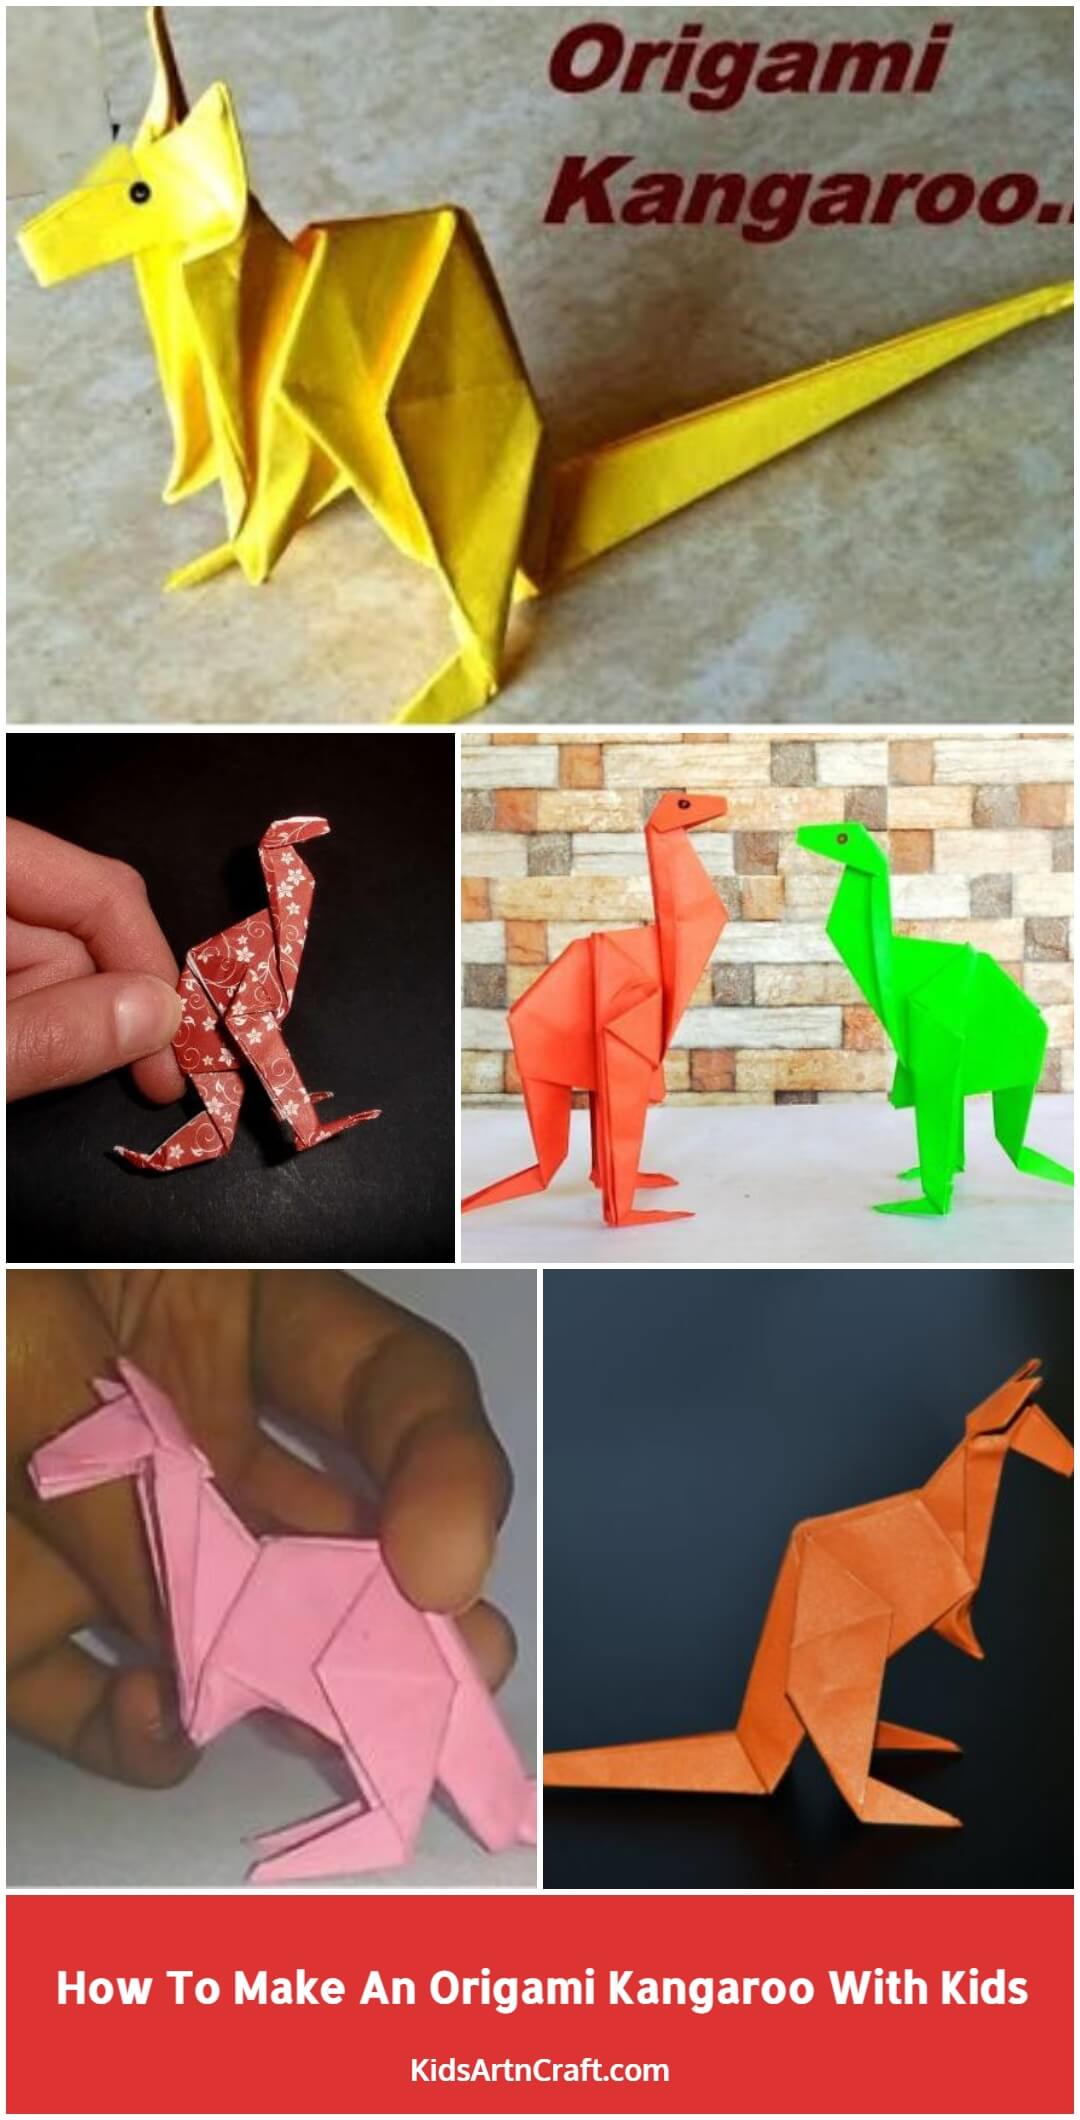 How To Make An Origami Kangaroo With Kids